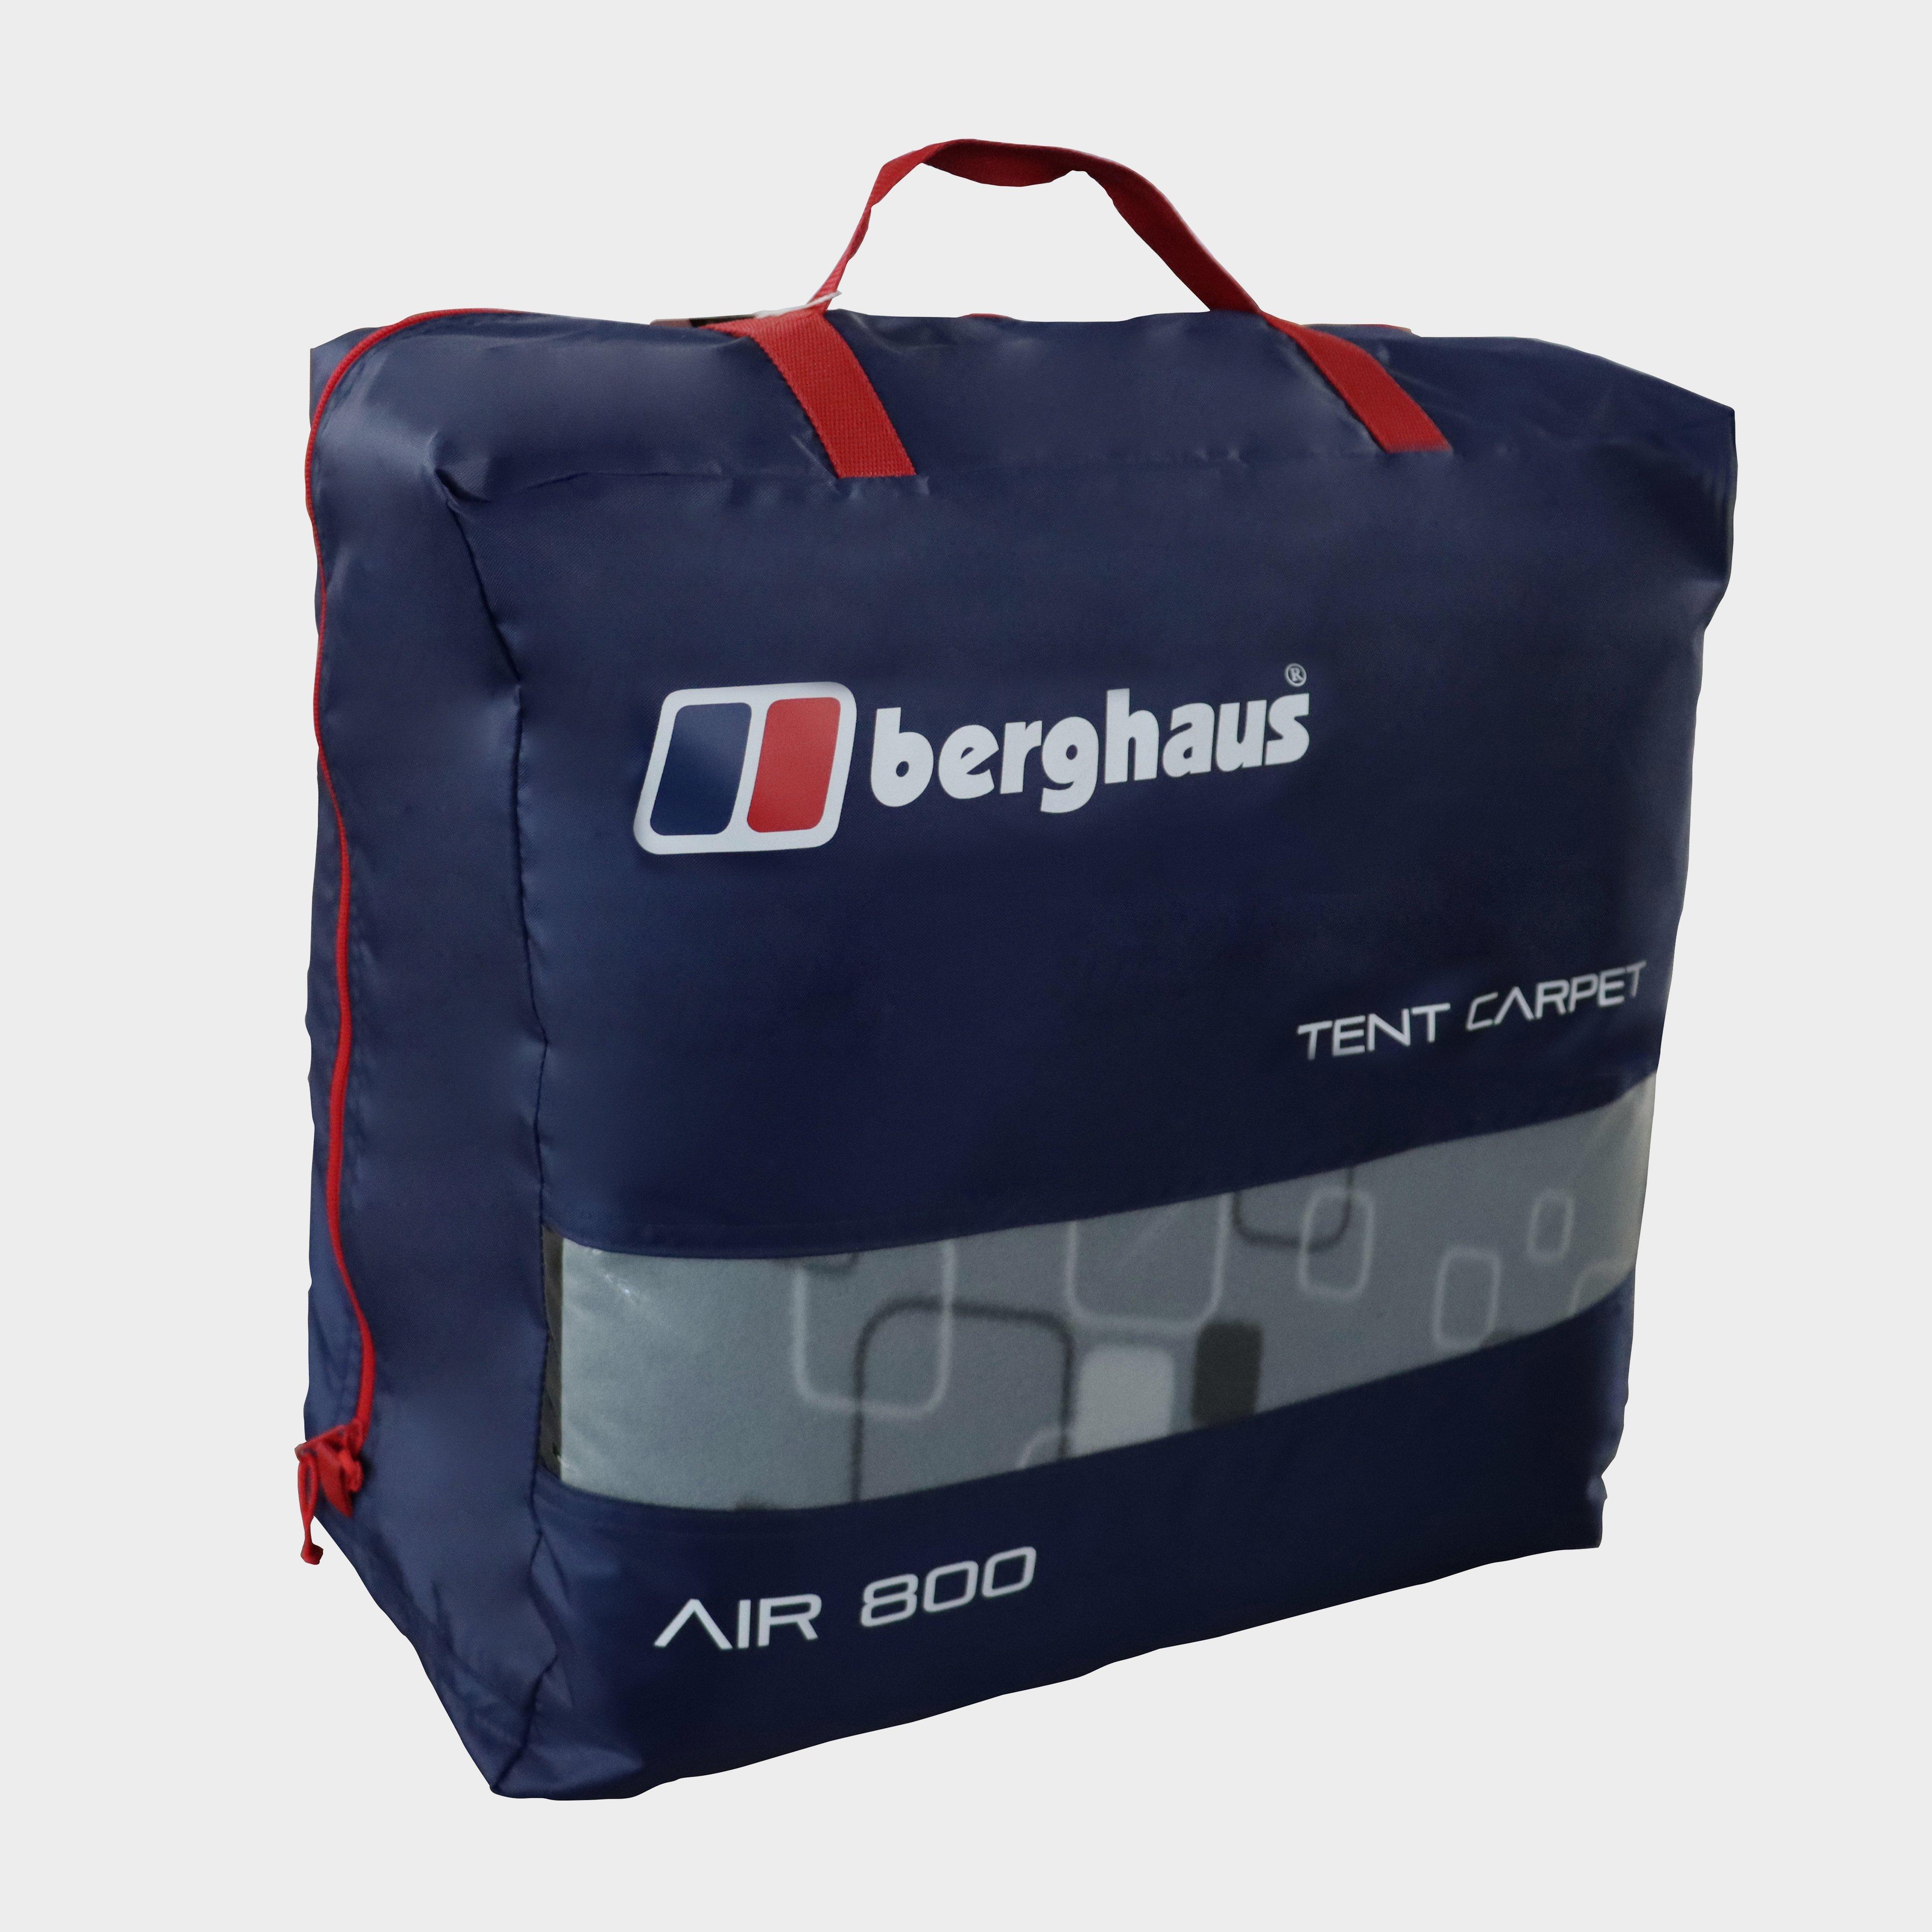 Berghaus Air 800/8.1/8 Tent Carpet - Grey, Grey